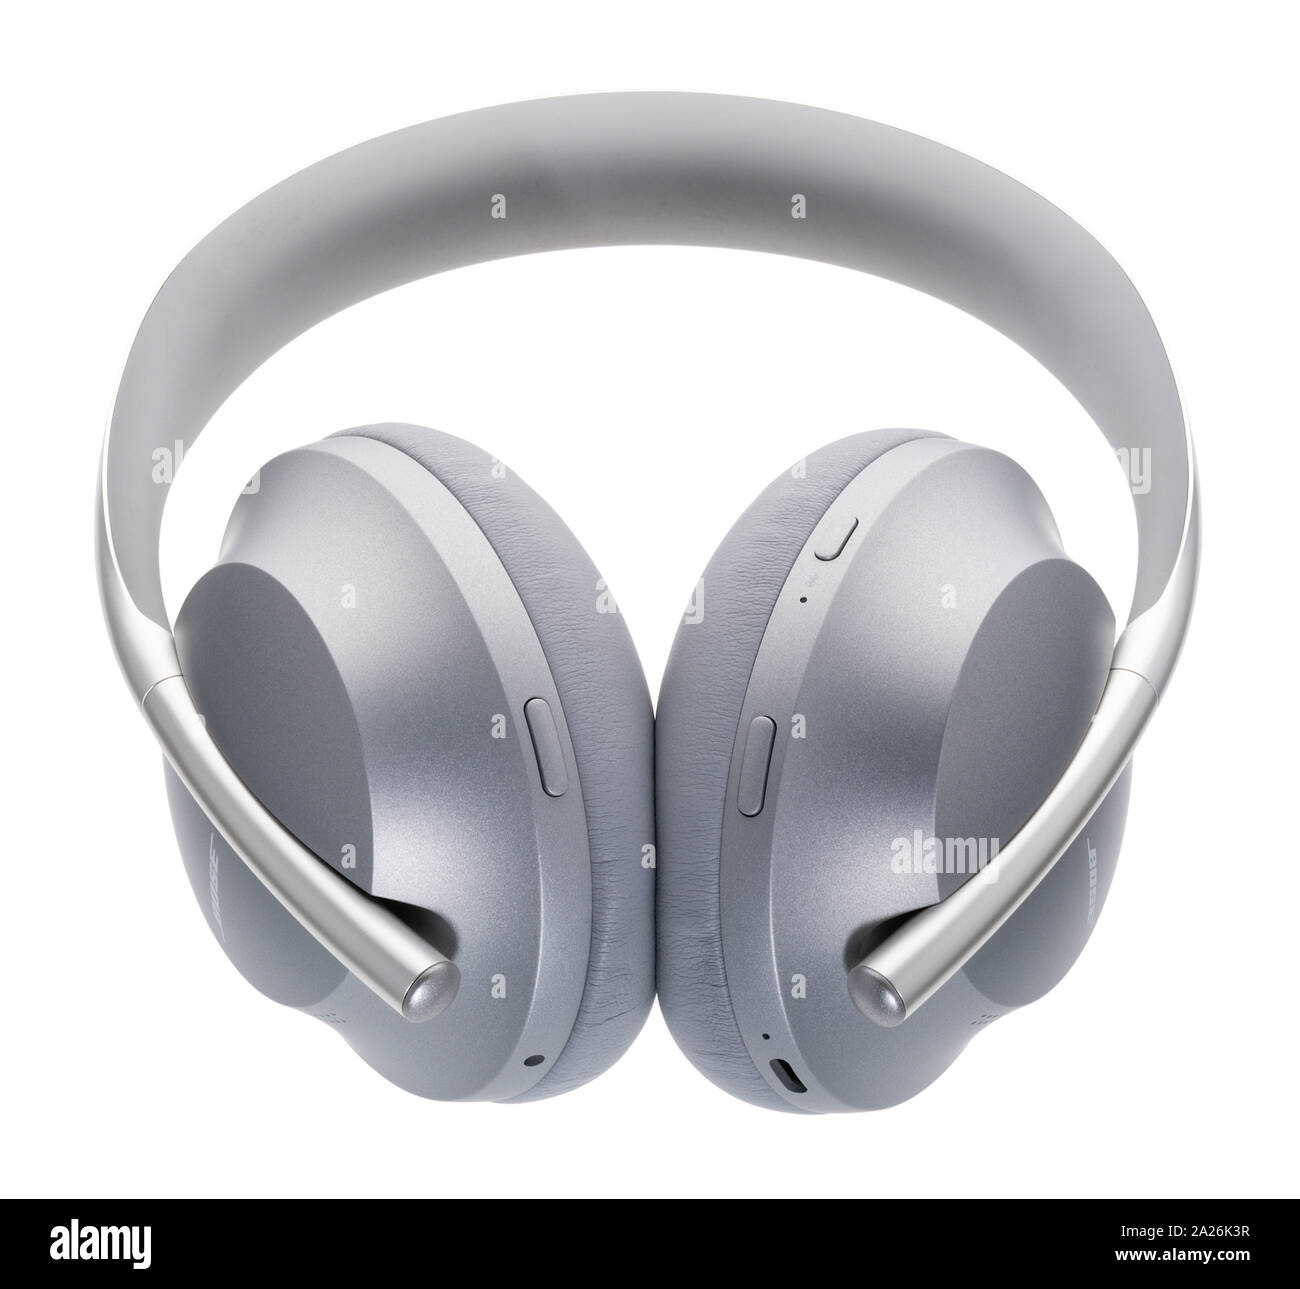 Bose noise cancelling headphones. Matt silver wireless headphones. Stock Photo